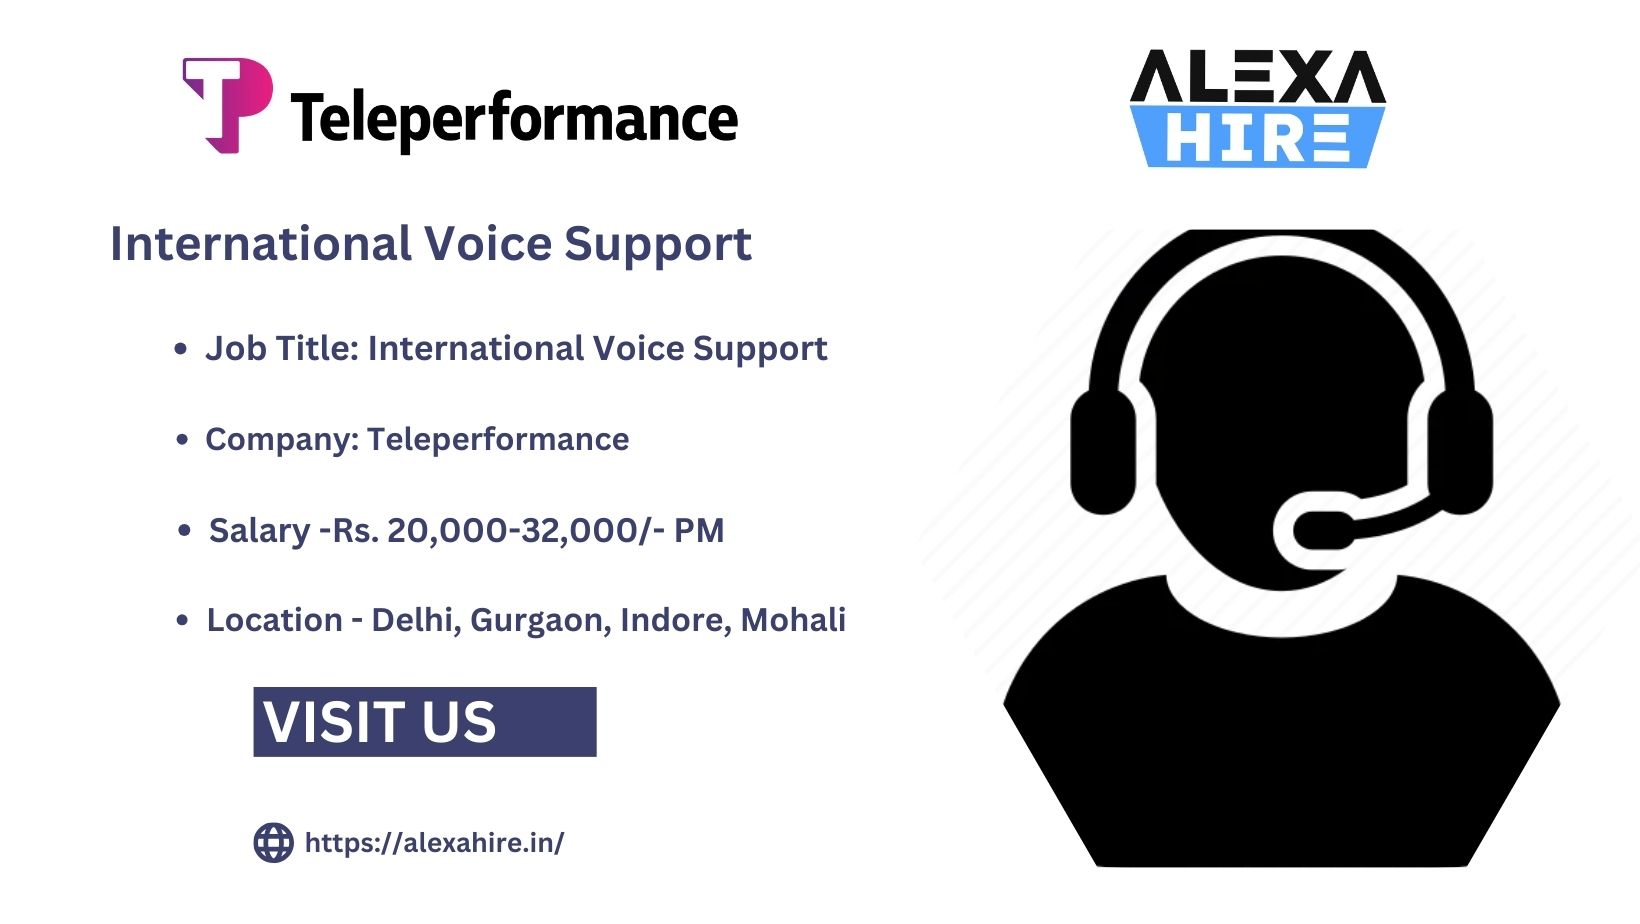 Teleperformance is Hiring International Voice Support Job